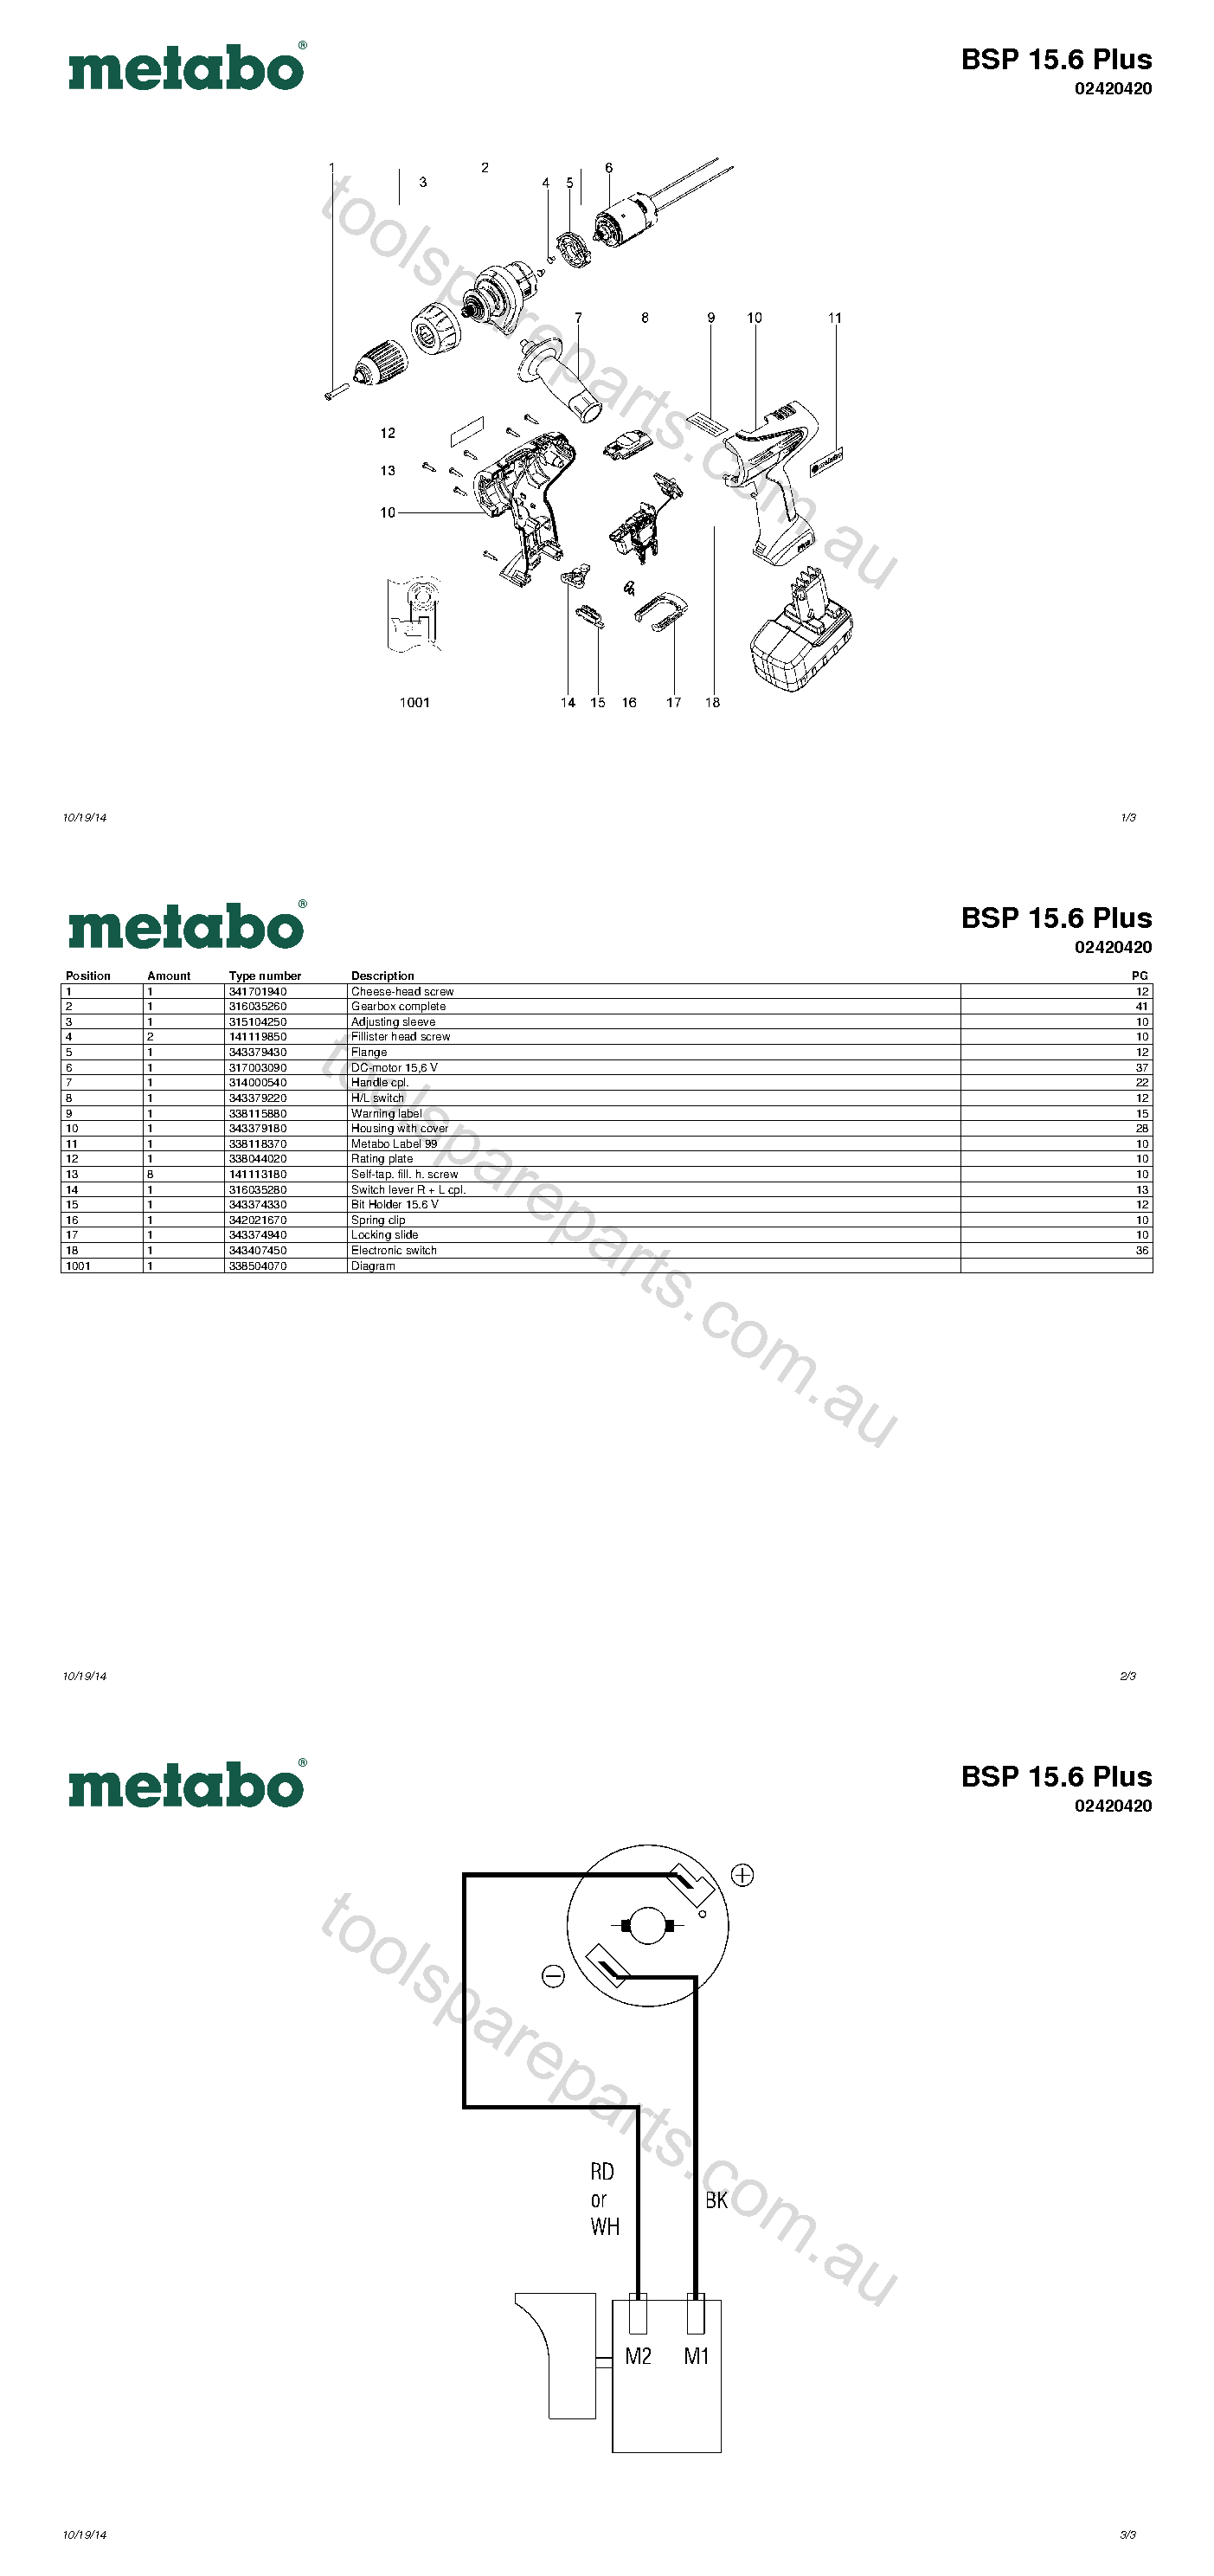 Metabo BSP 15.6 Plus 02420420  Diagram 1